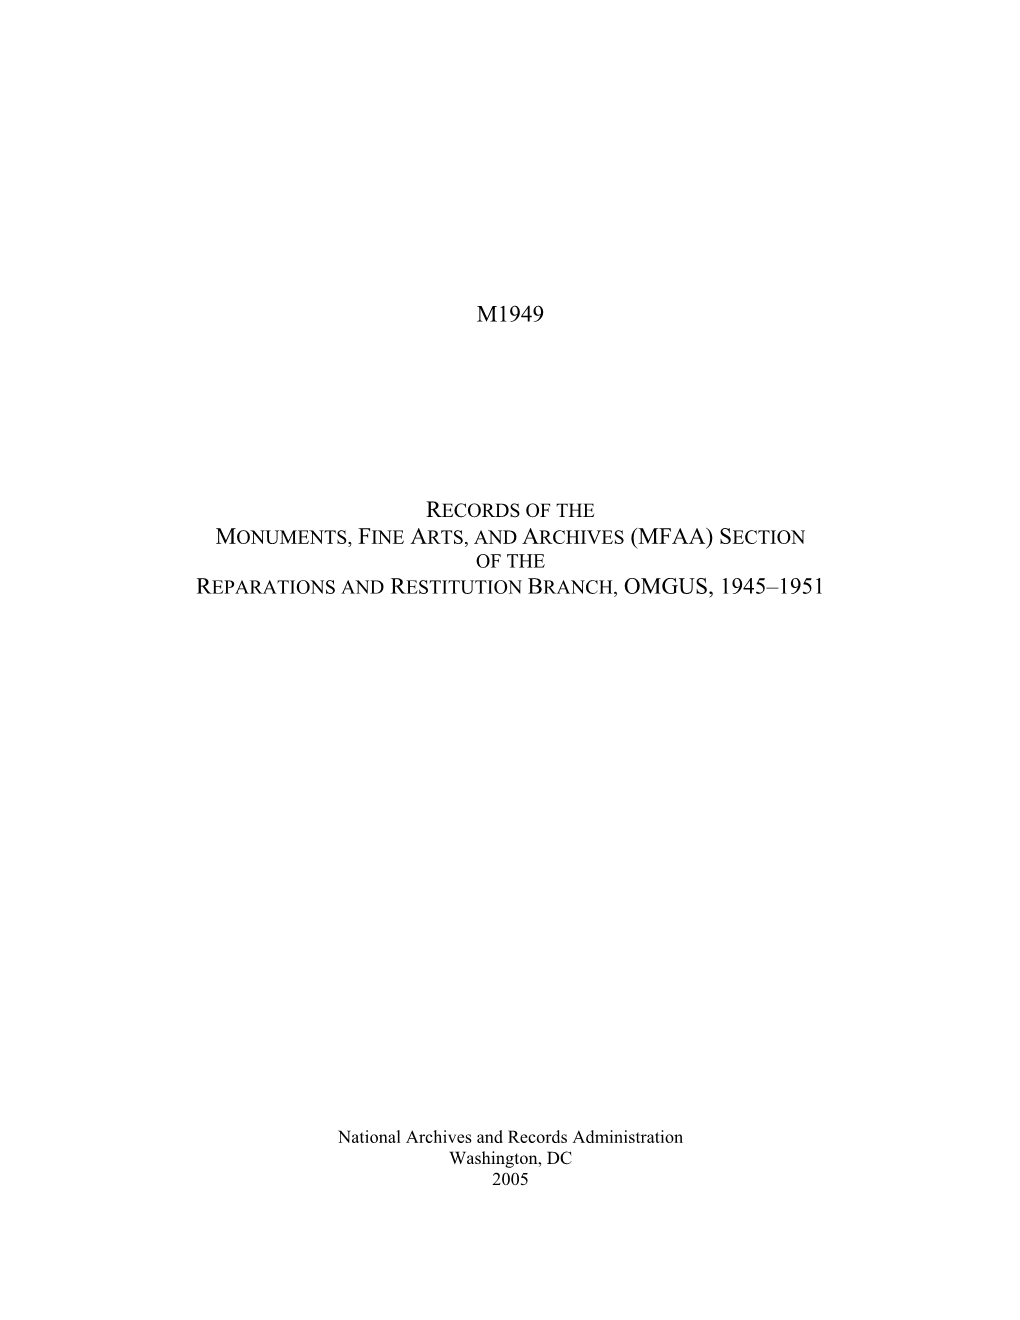 NARA Microfilm Publication M1949